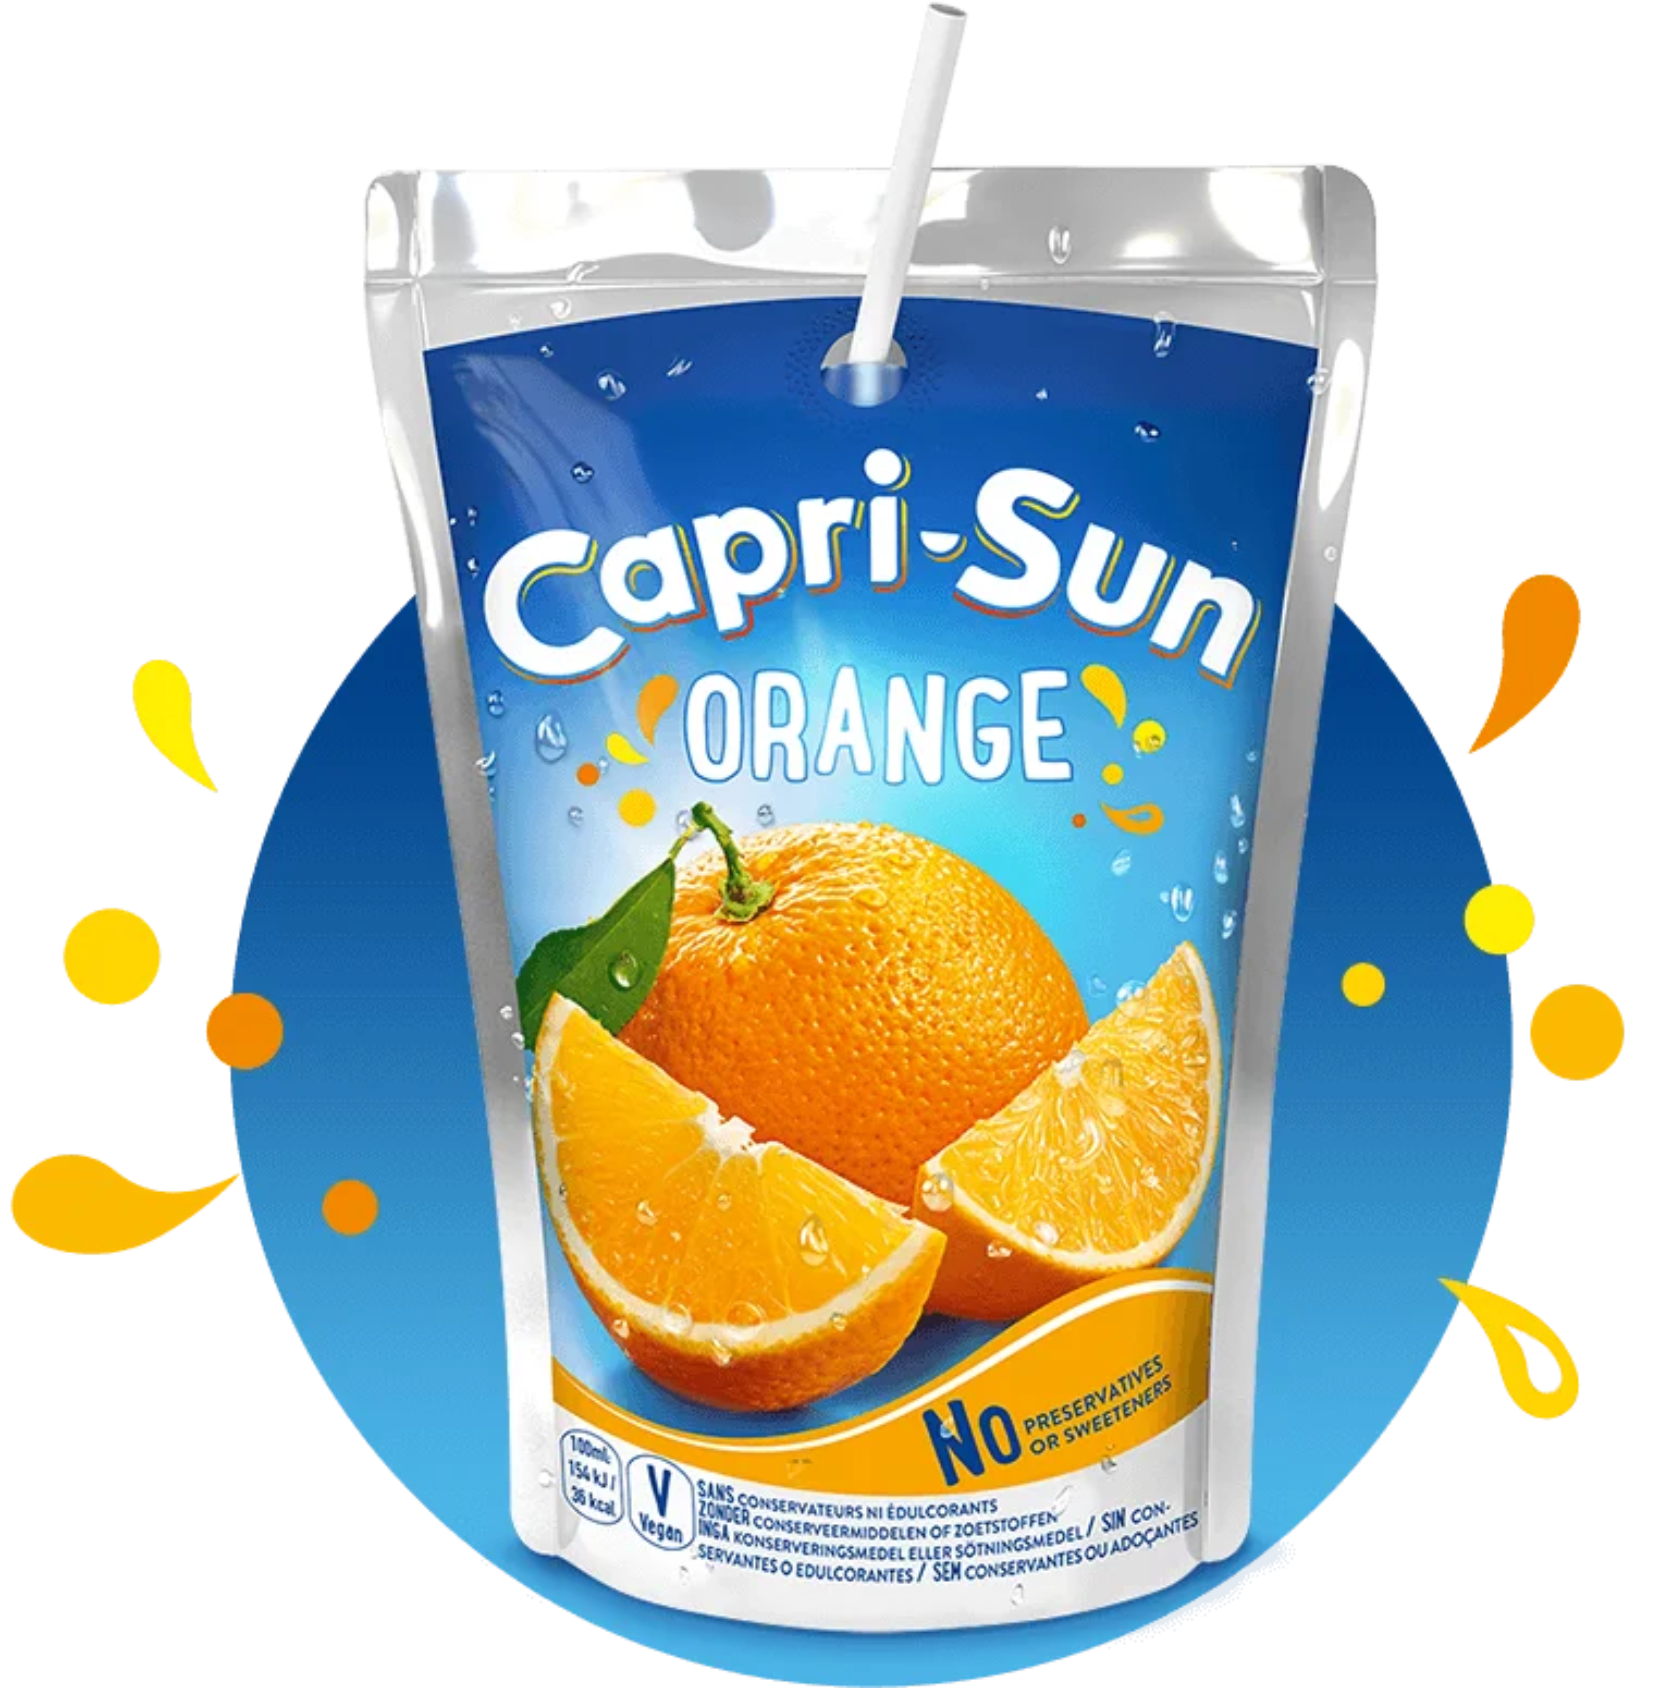 Capri-Sun Orange 20cl x10 [T140]